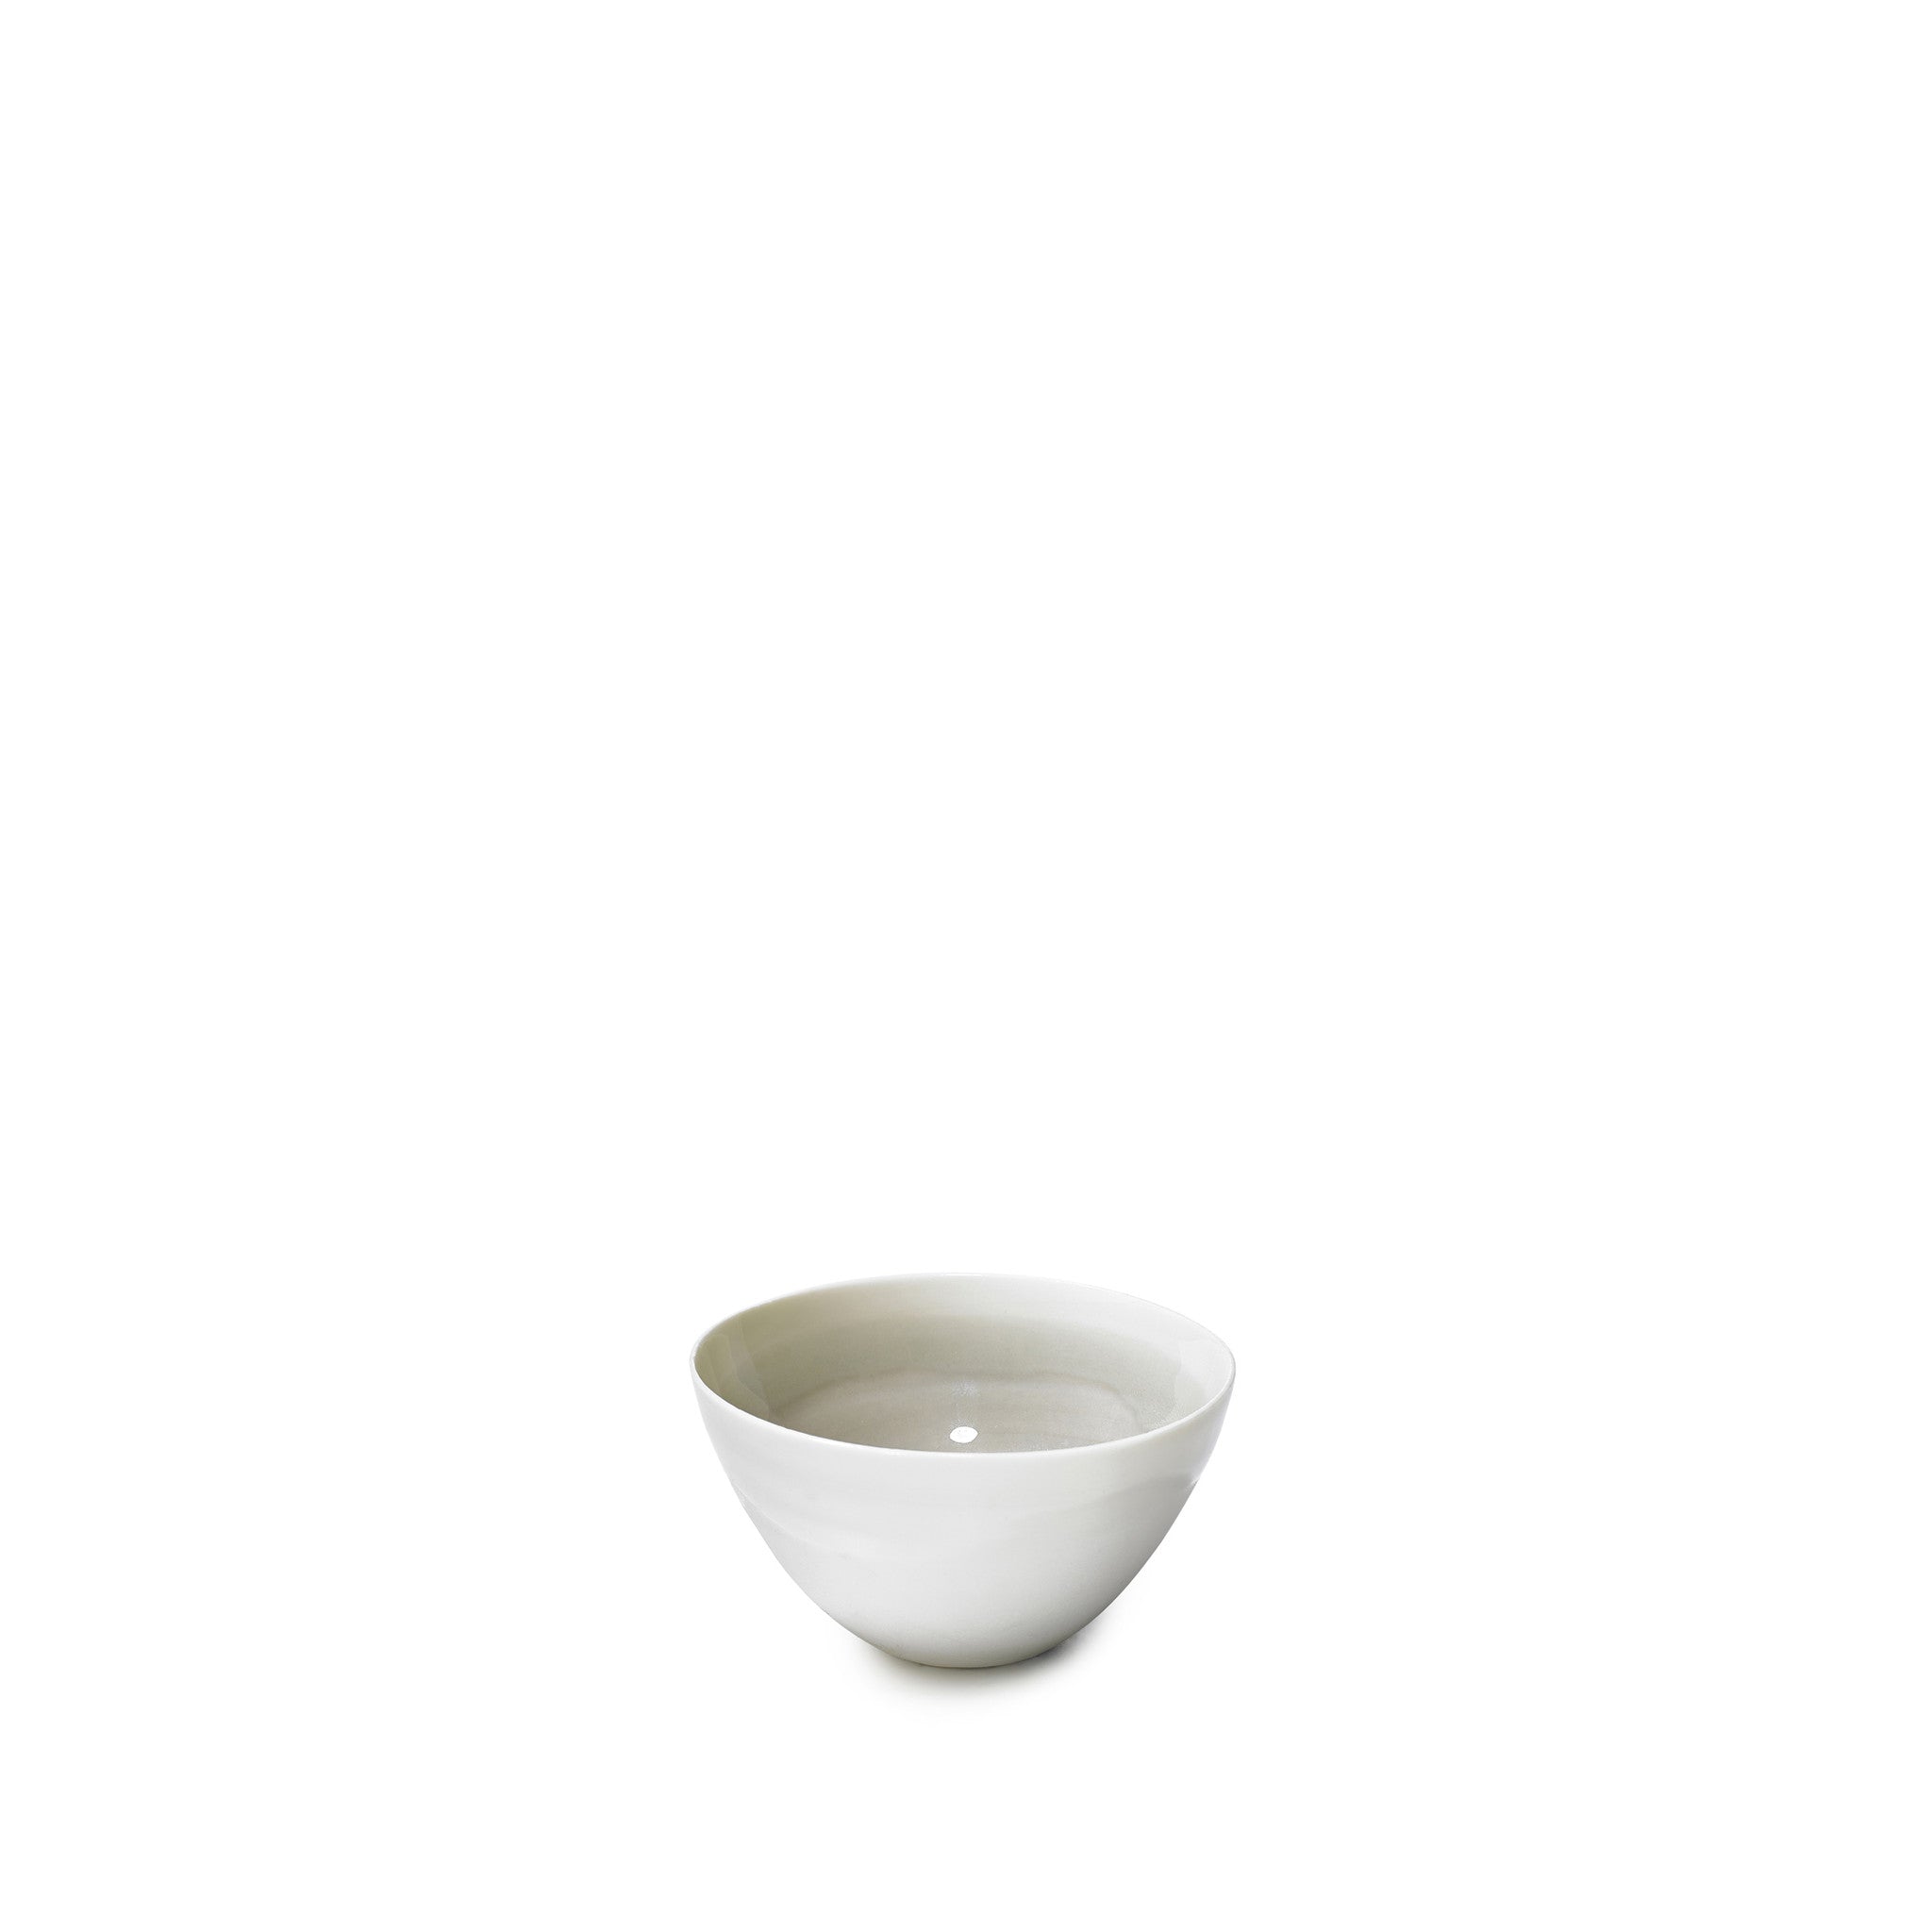 Small Light Grey Porcelain Bowl with White Edge, 8cm